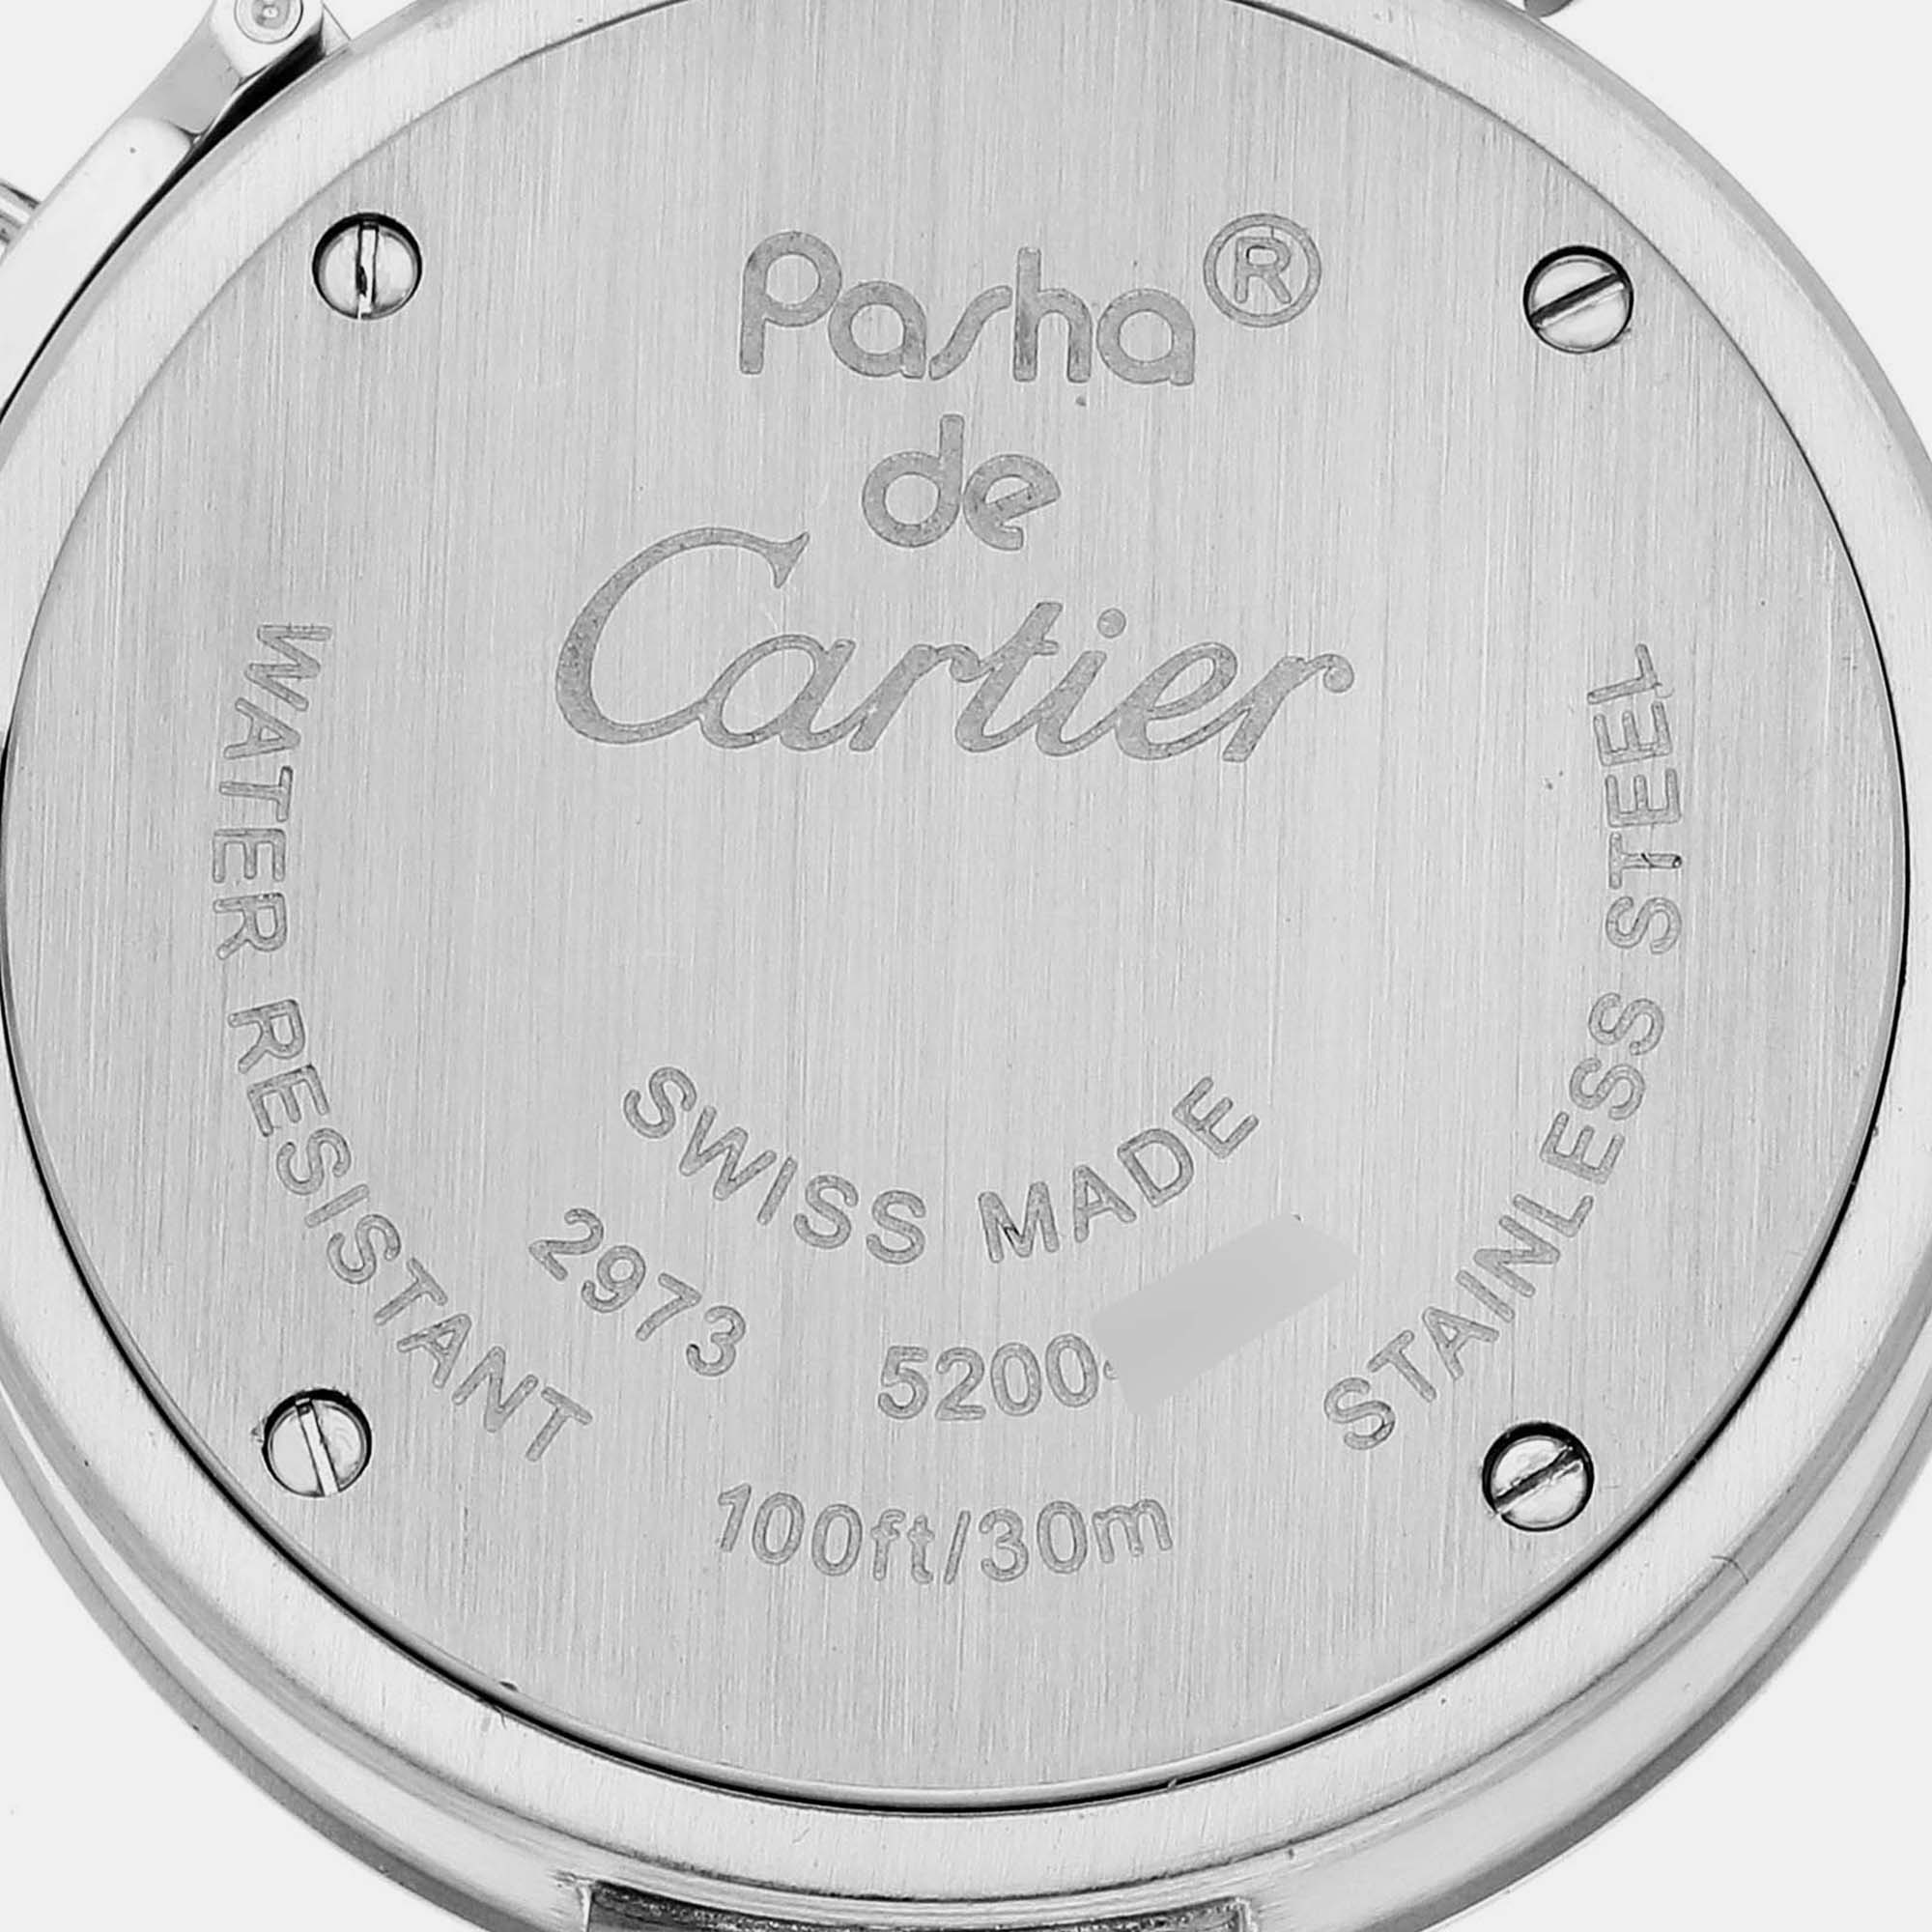 Cartier Miss Pasha 1st Anniversary Blue Dial Steel Ladies Watch W3140024 27 Mm